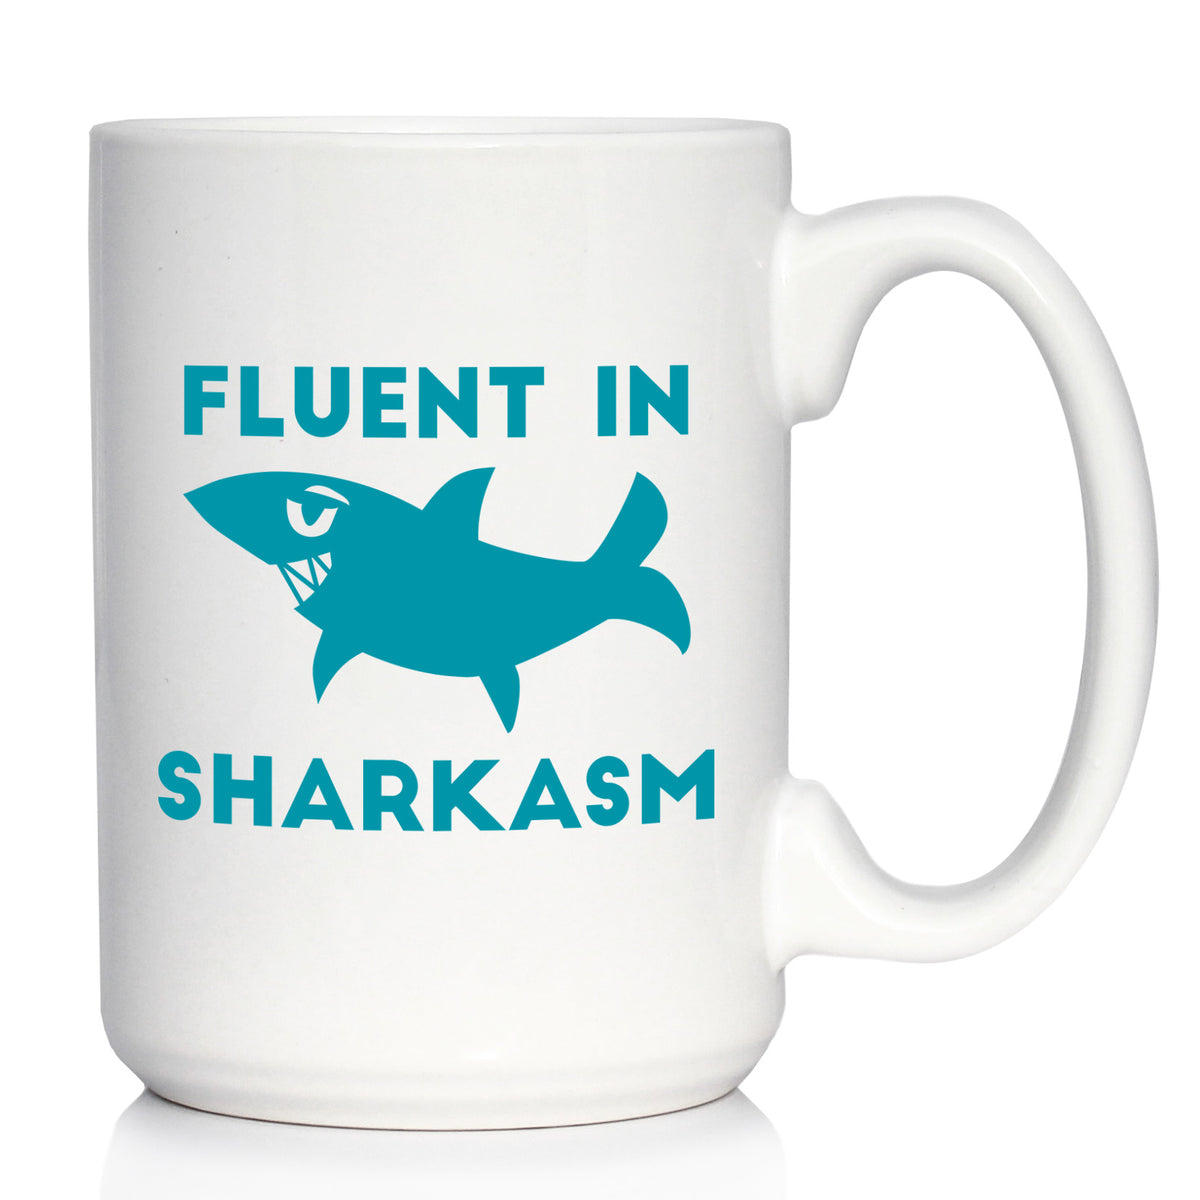 Fluent in Sharkasm - Shark Coffee Mug - Cute Funny Gifts for Sarcastic Moms or Dad Joke Lovers